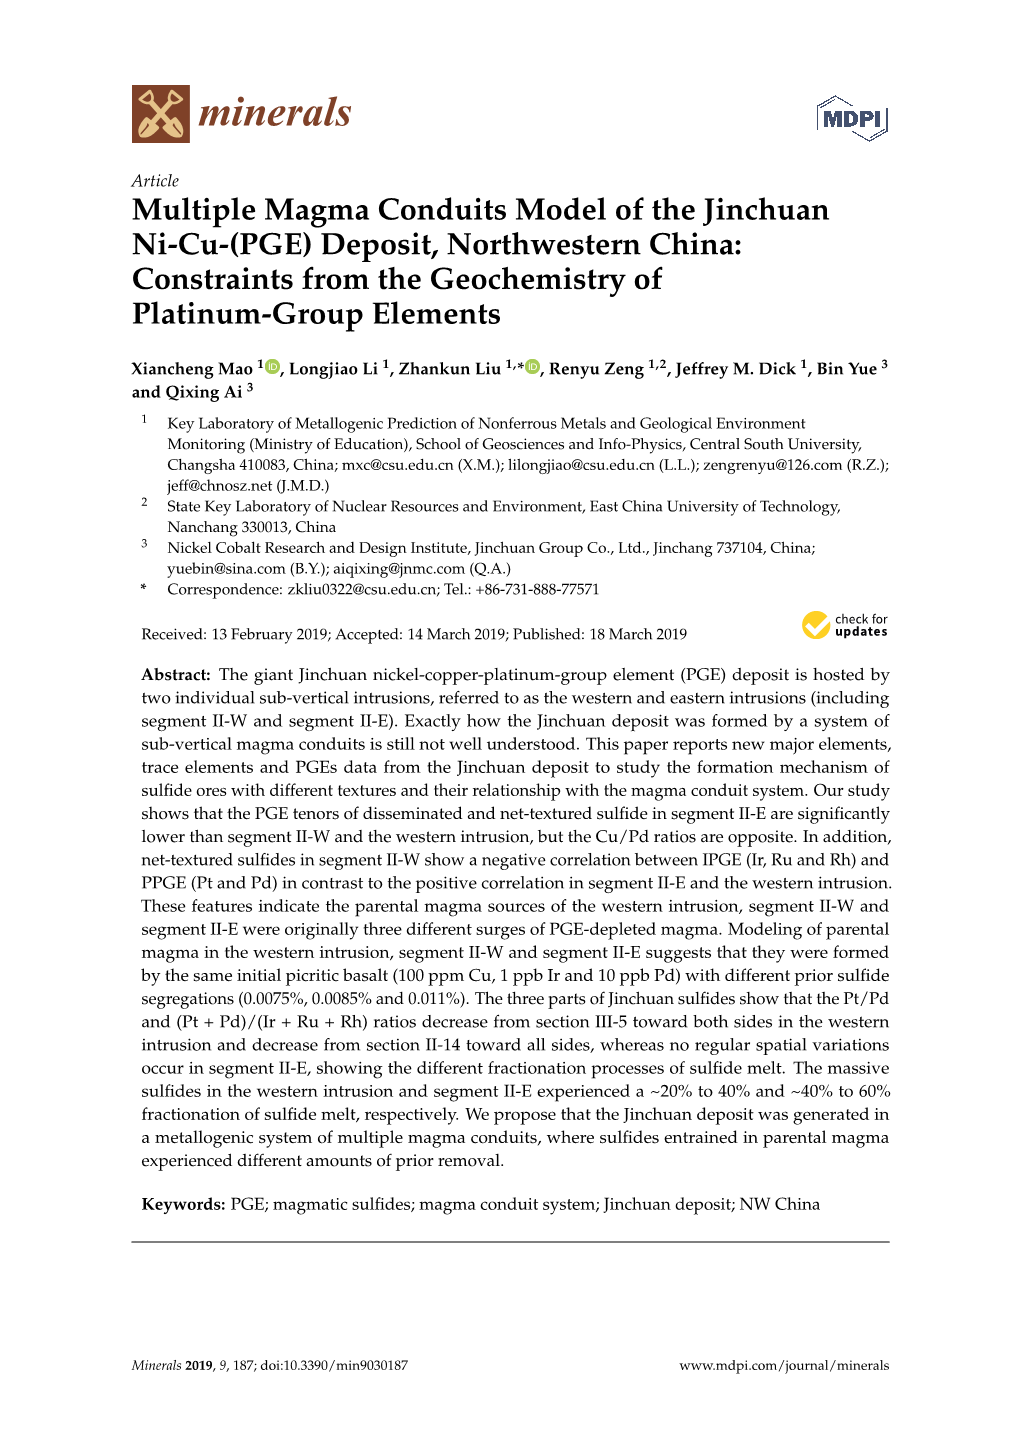 PGE) Deposit, Northwestern China: Constraints from the Geochemistry of Platinum-Group Elements